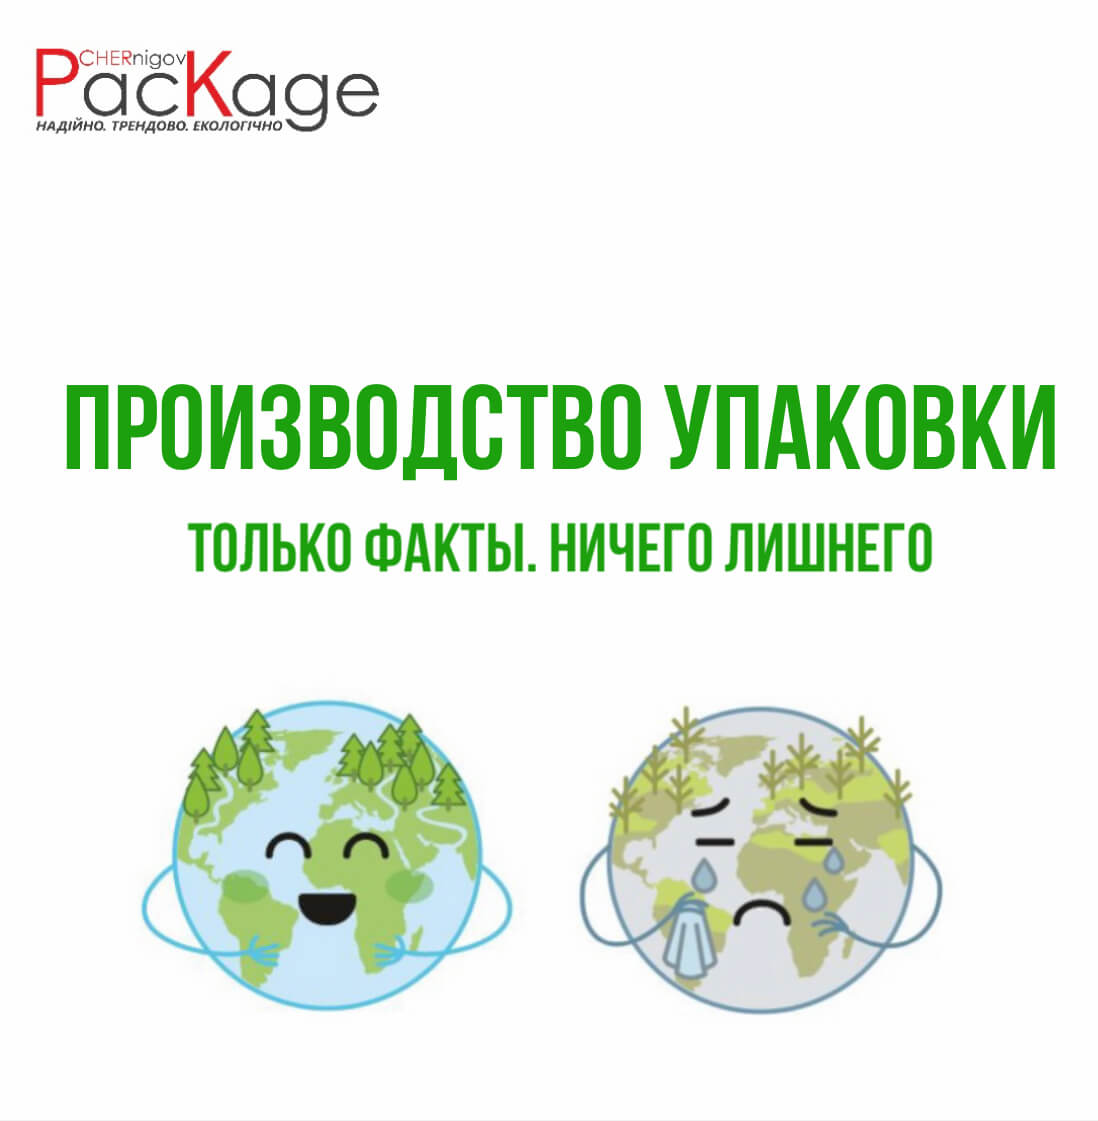 Влияние упаковки на будущее Chernigov Package - Фото изображение_viber_2021-11-18_10-50-46